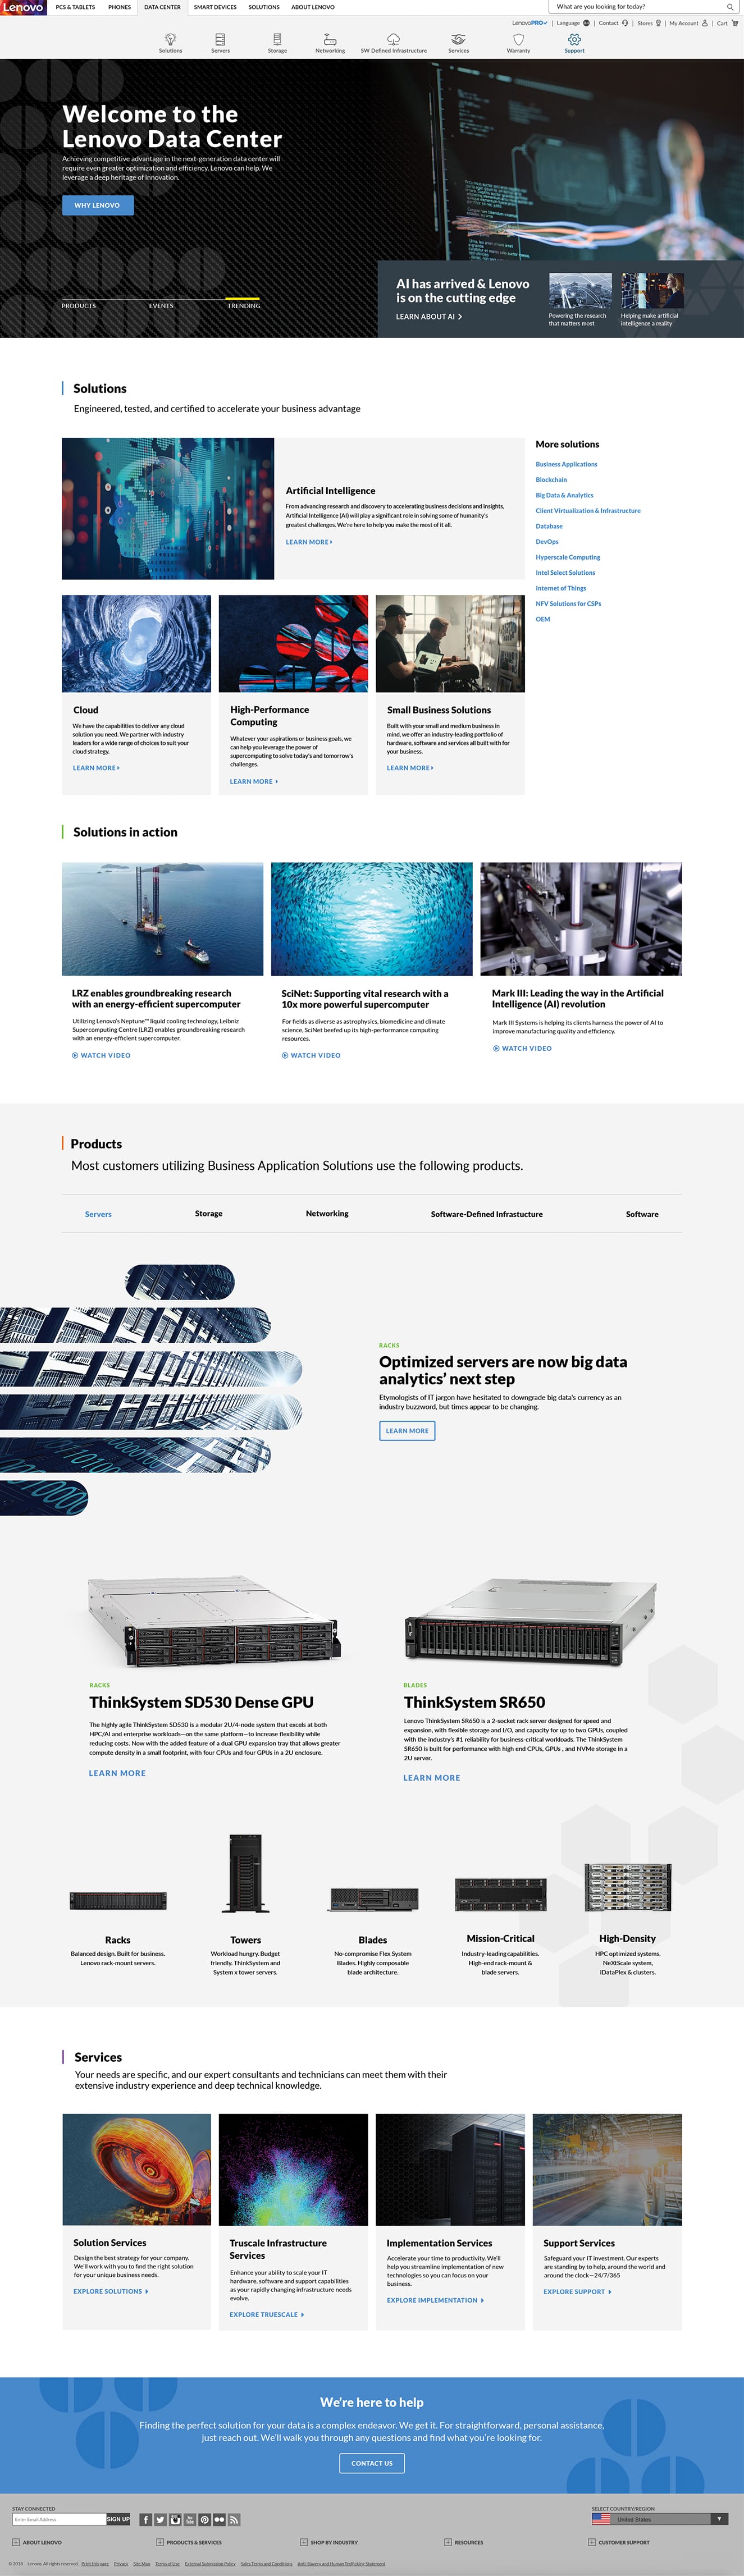 Lenovo Data Center Landing Page